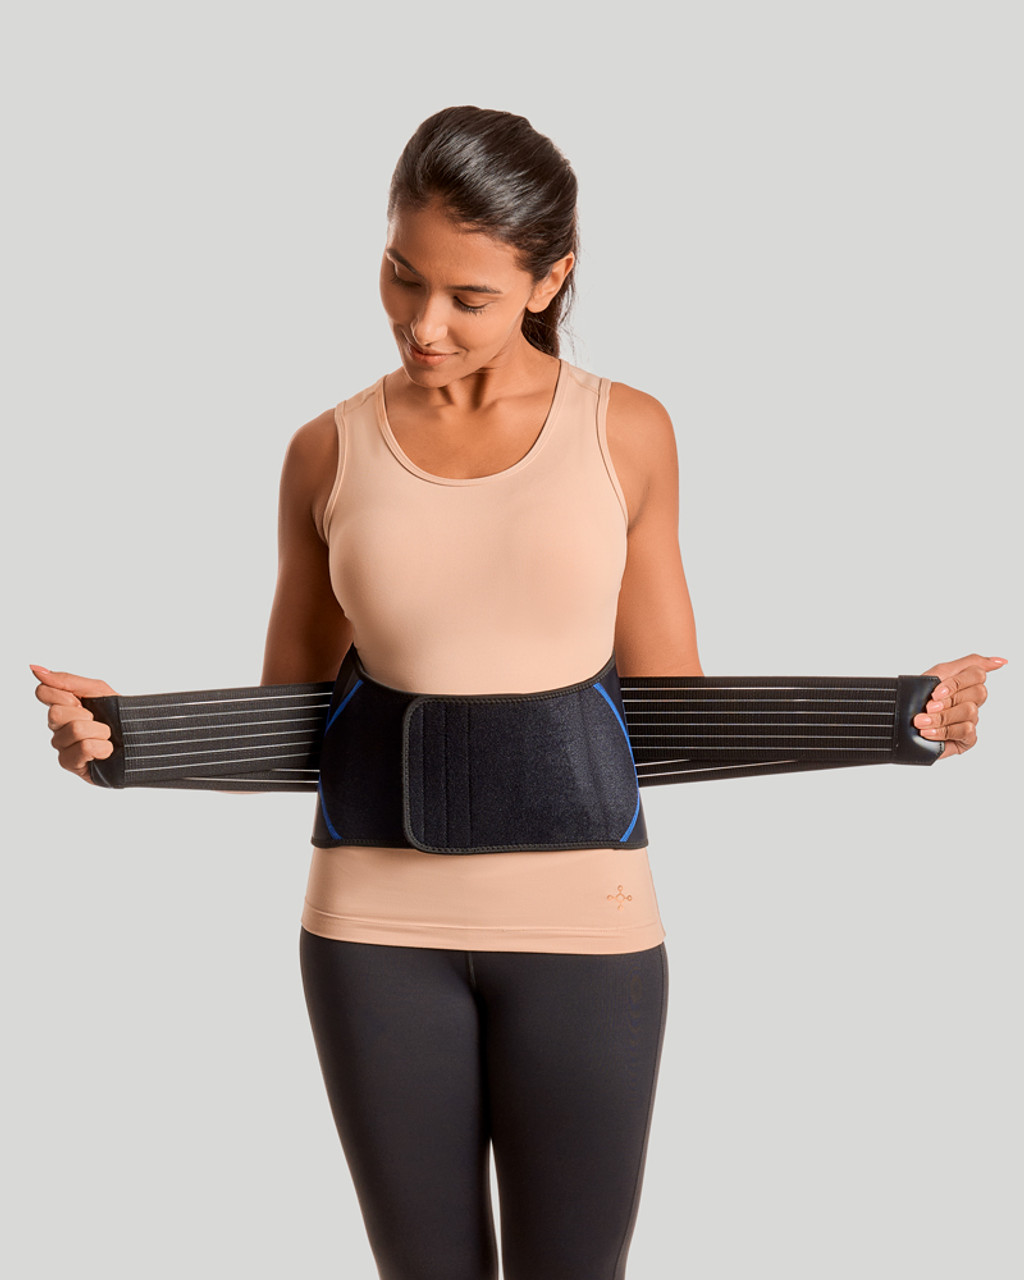 Tommie Copper Pro-Grade Adjustable Support Back Brace Unisex Men & Women  Breathable Ultra Flex Stability Straps for Lumbar Posture & Muscle Support  - Black - Large/X-Large L/XL